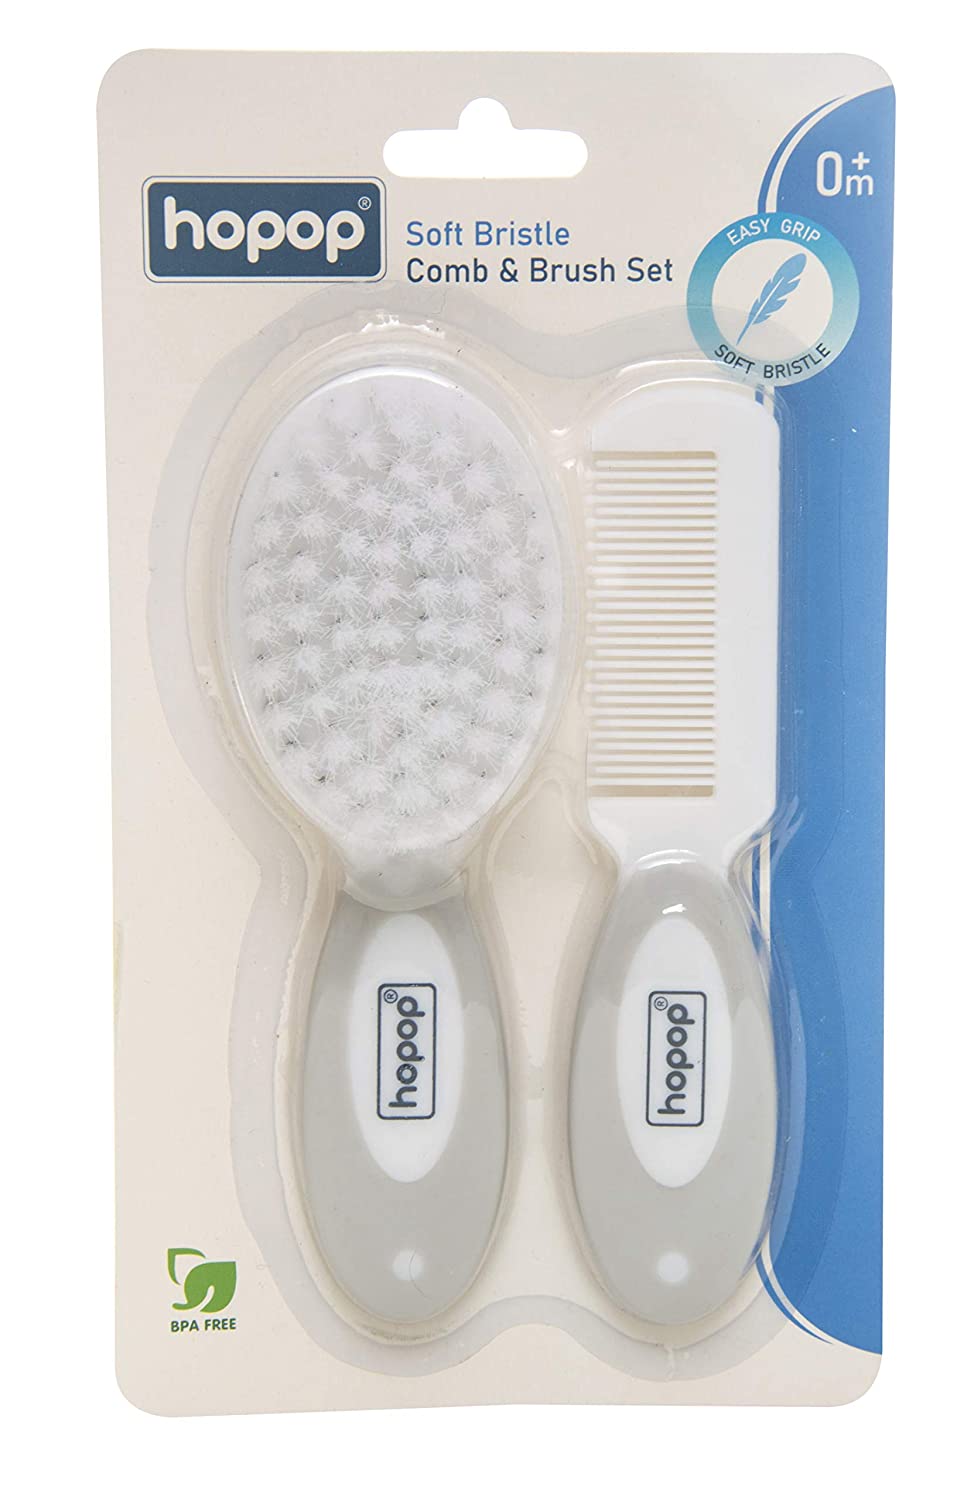 HOPOP Soft Bristle Comb & Brush Set For Babies - White & Grey 0m+